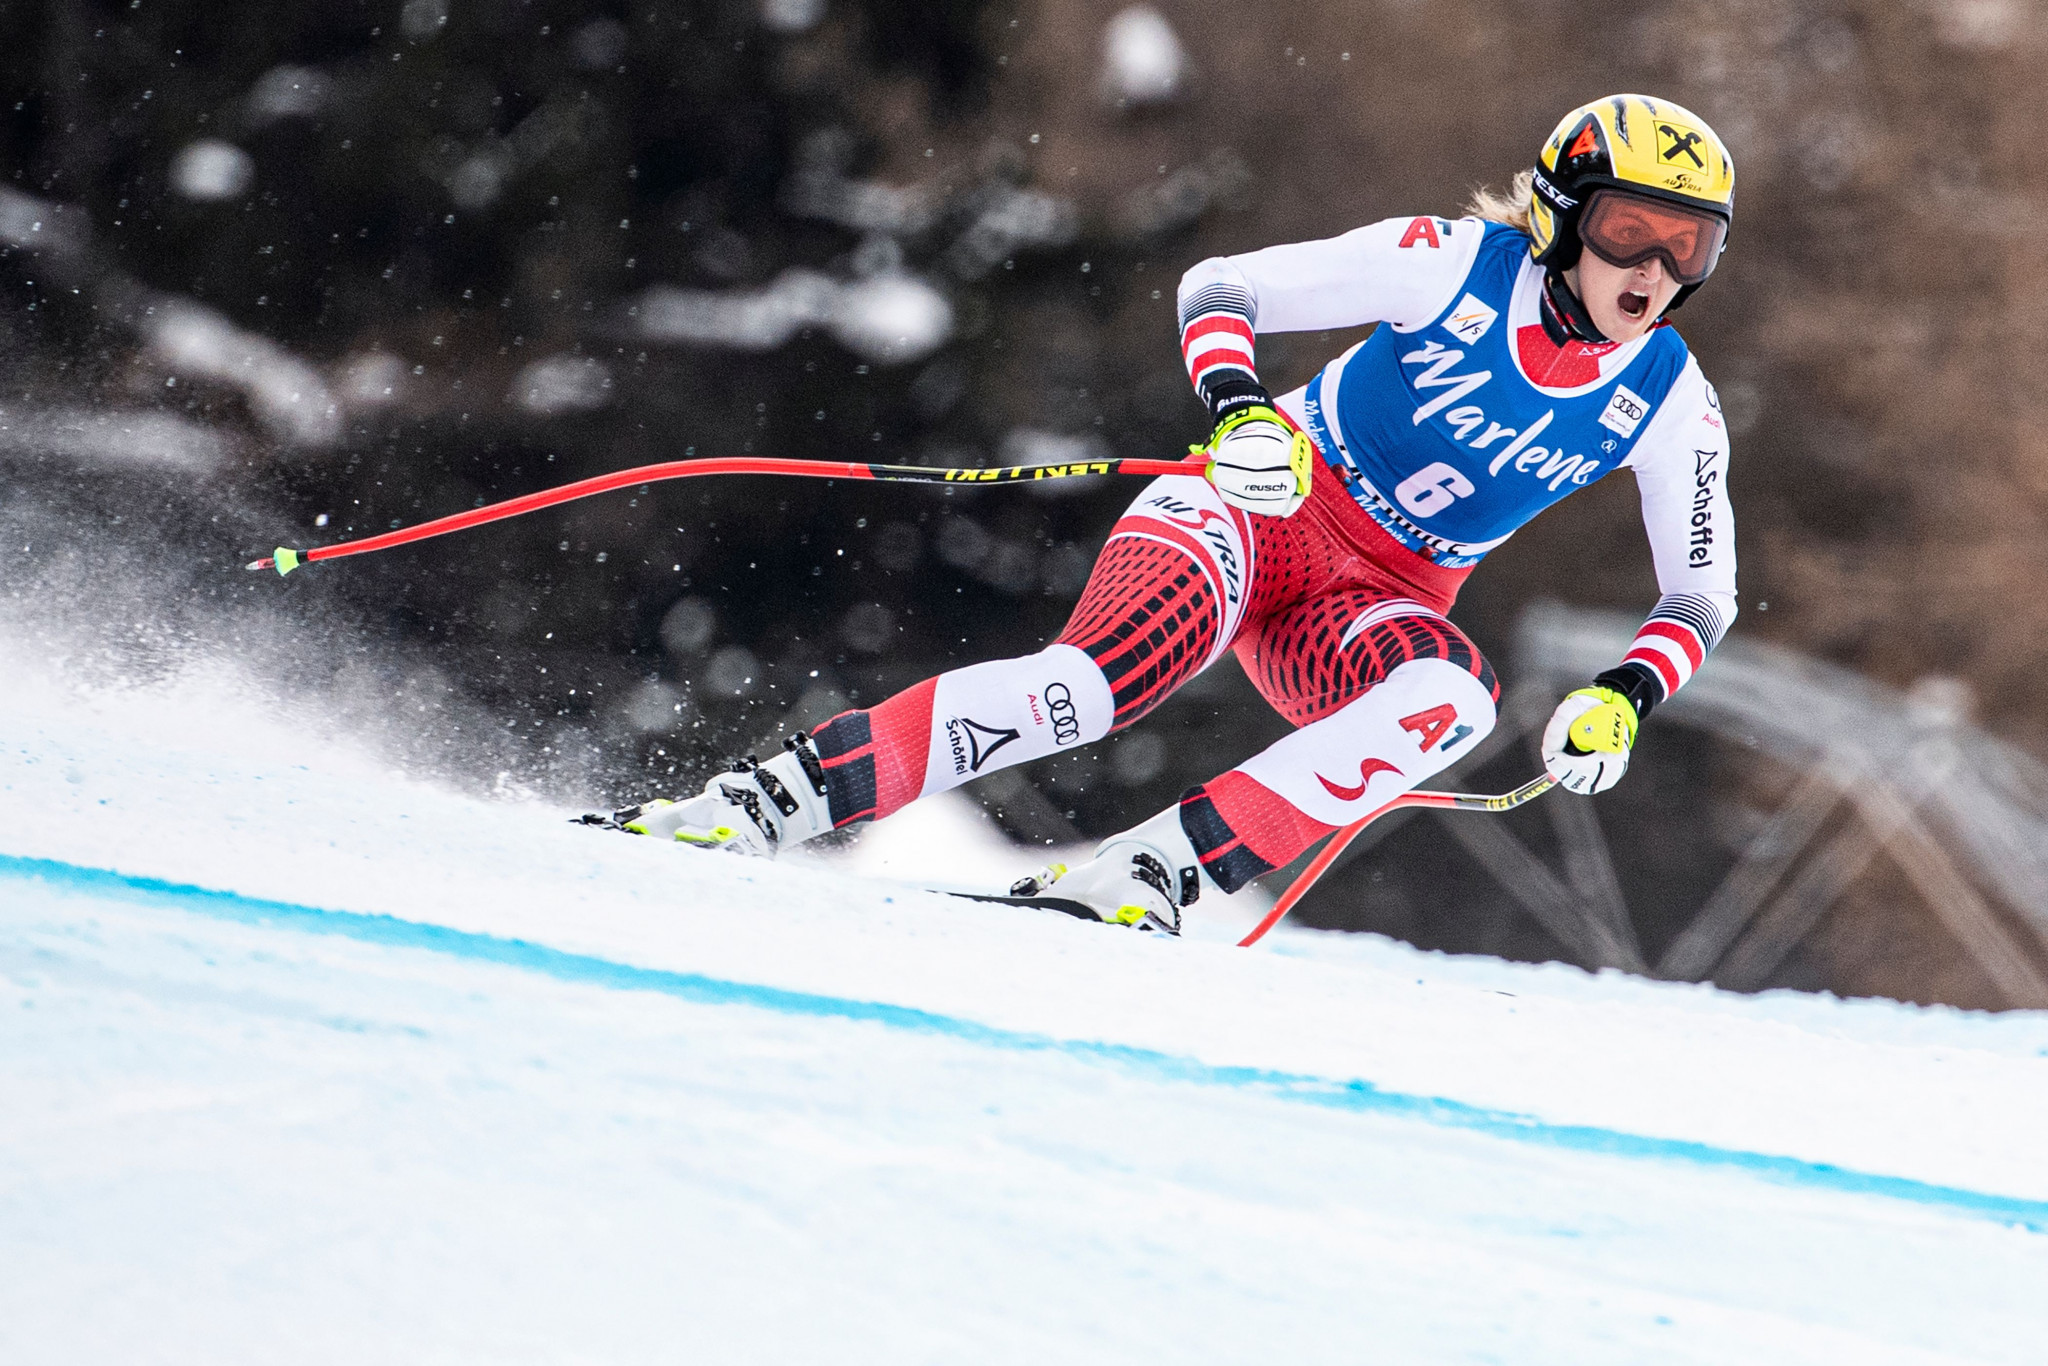 Ortlieb earns first FIS Alpine Skiing World Cup win in La Thuile